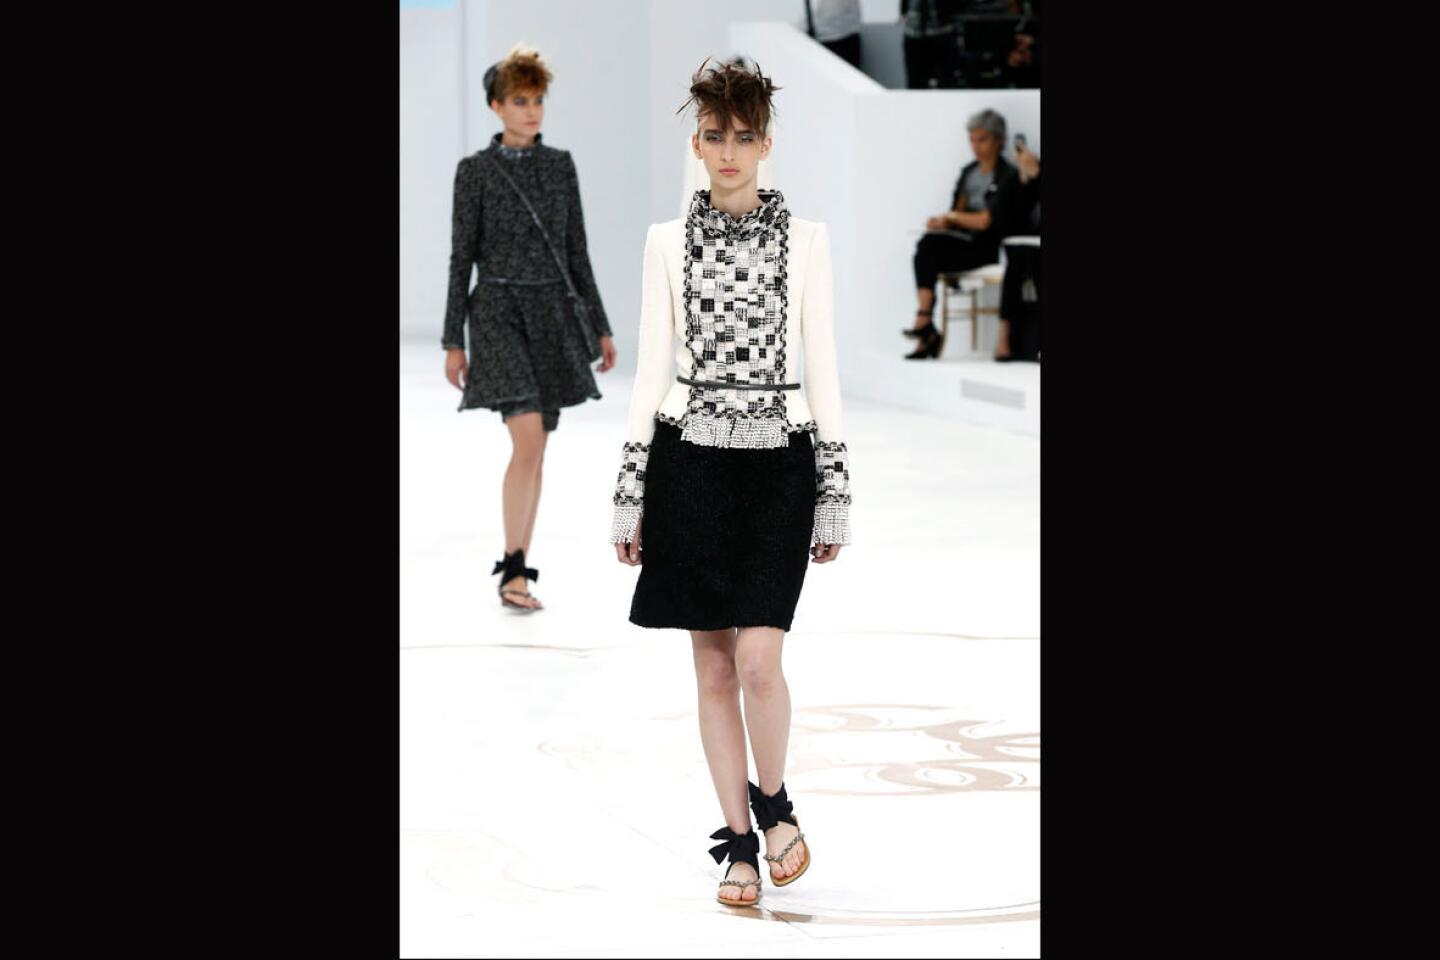 Chanel's haute couture show borrows from modern architecture - Los